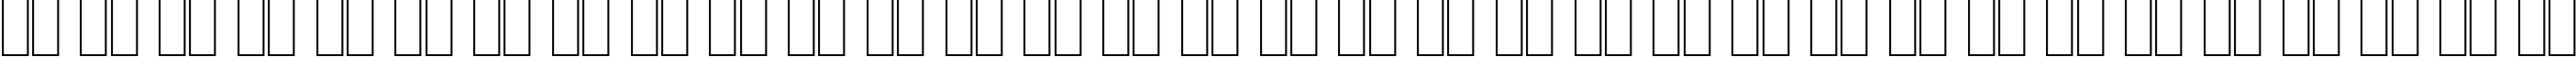 Пример написания русского алфавита шрифтом OnStageSerial-Medium-Italic